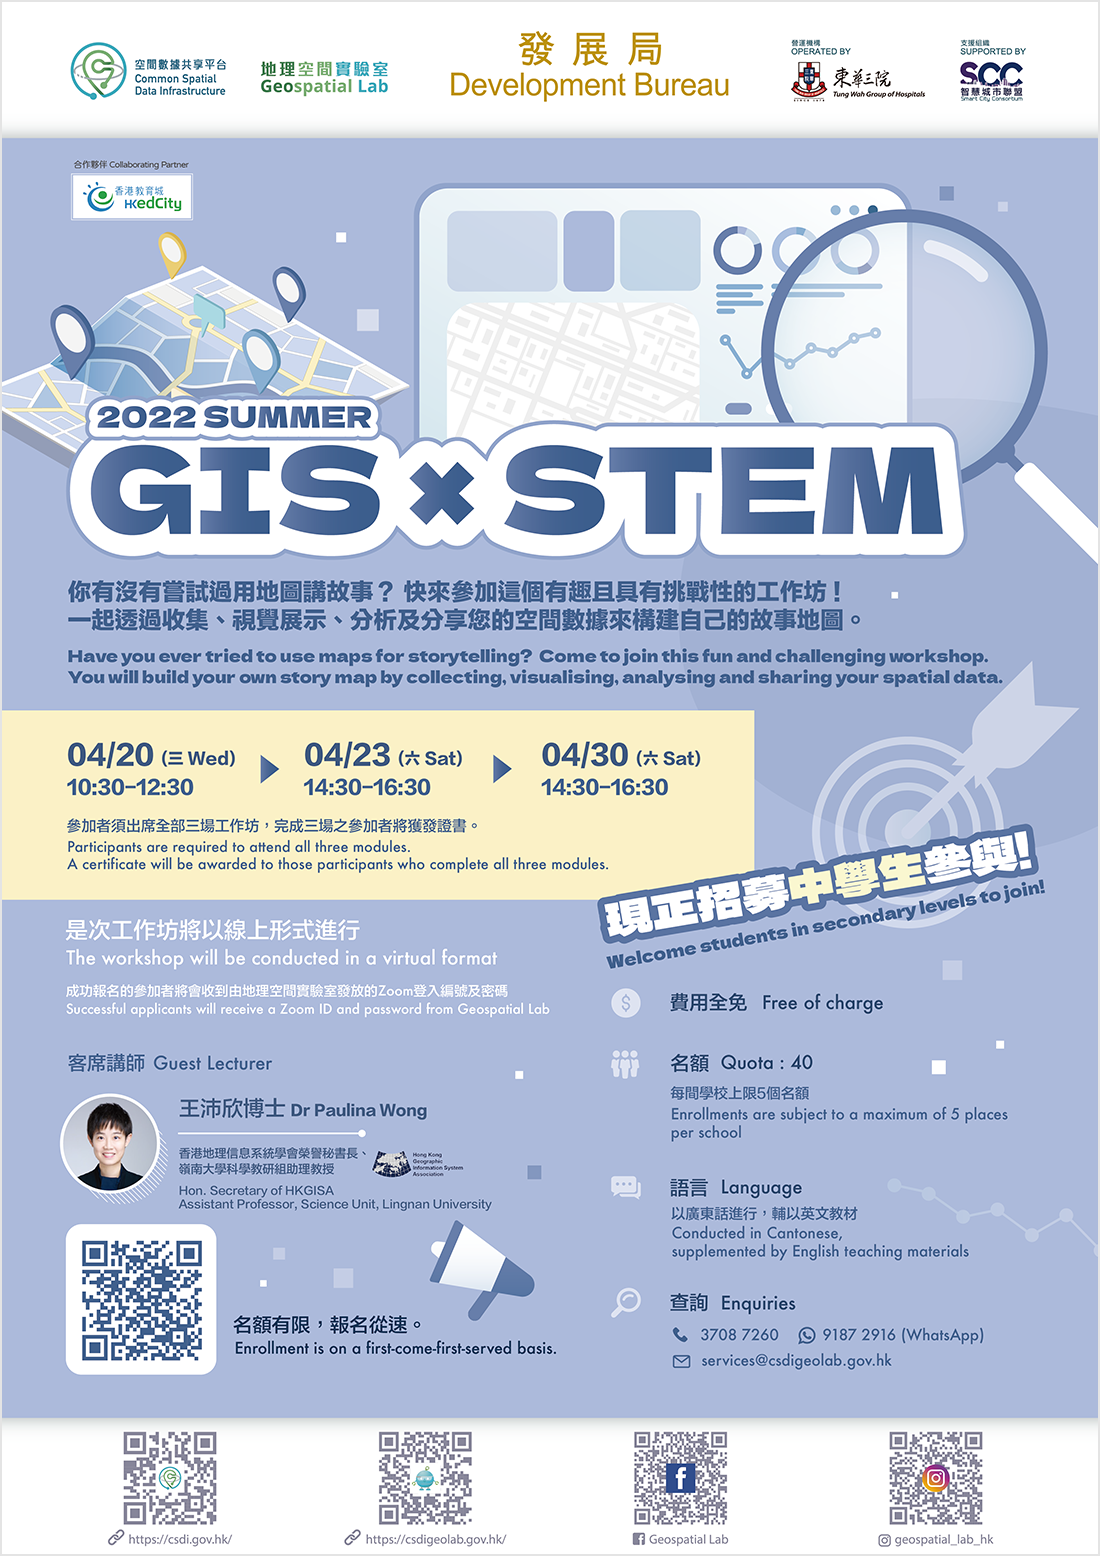 2022 Summer GIS X STEM Workshop (3 modules)